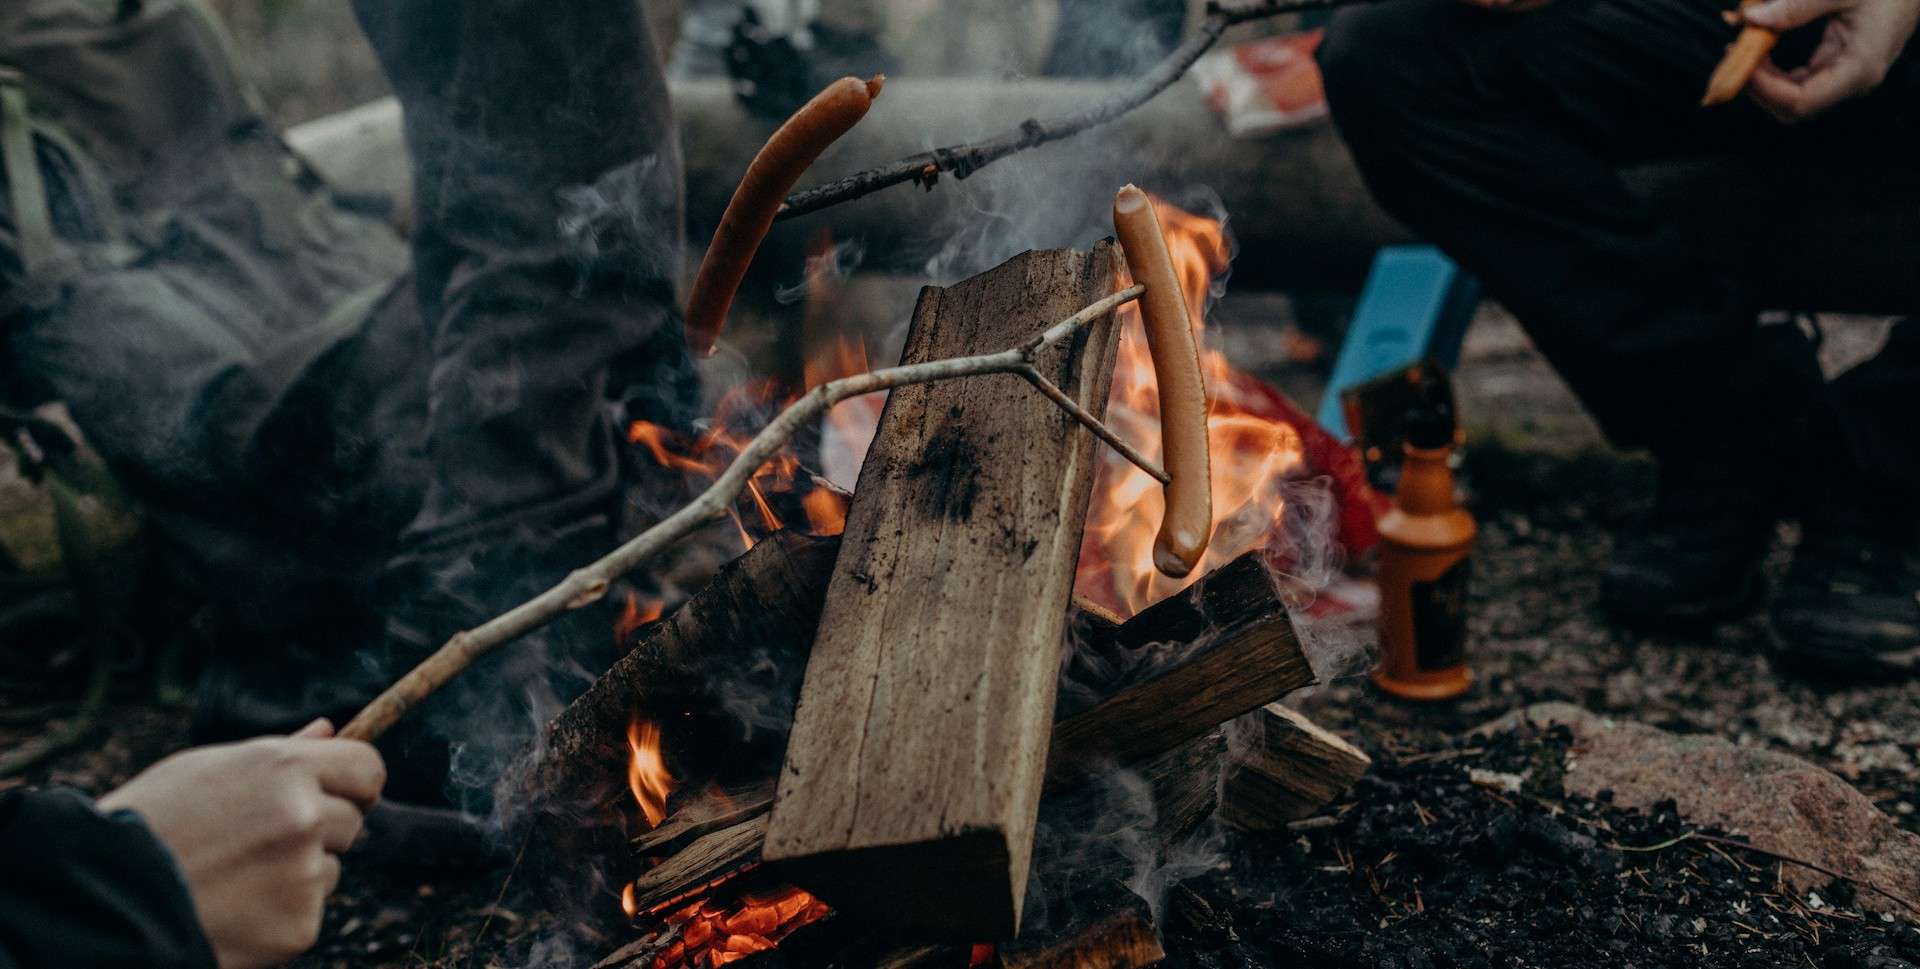 Long Burning Firewood For Heat